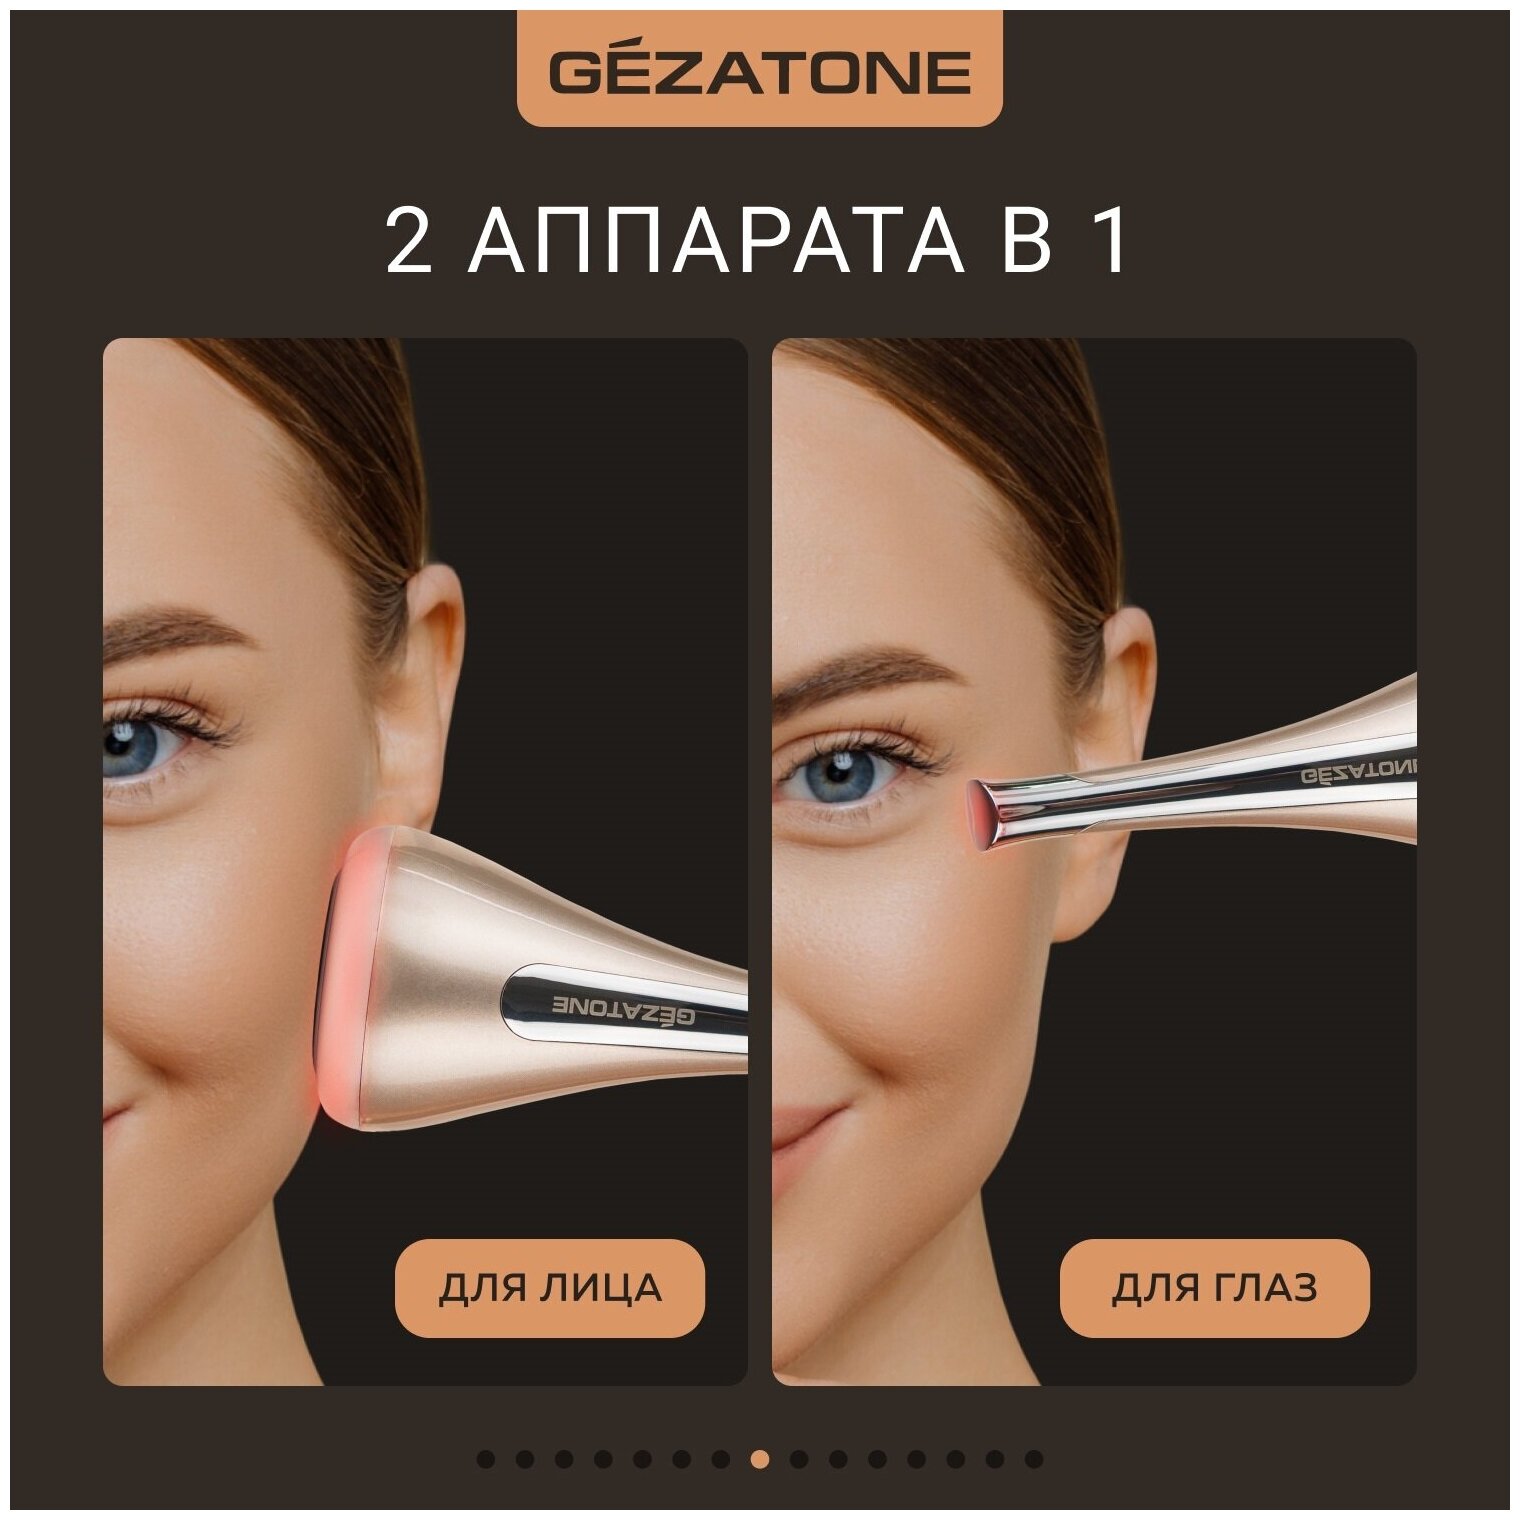 Прибор для ухода за кожей Minilift+ для лица, Gezatone m810 - фотография № 19